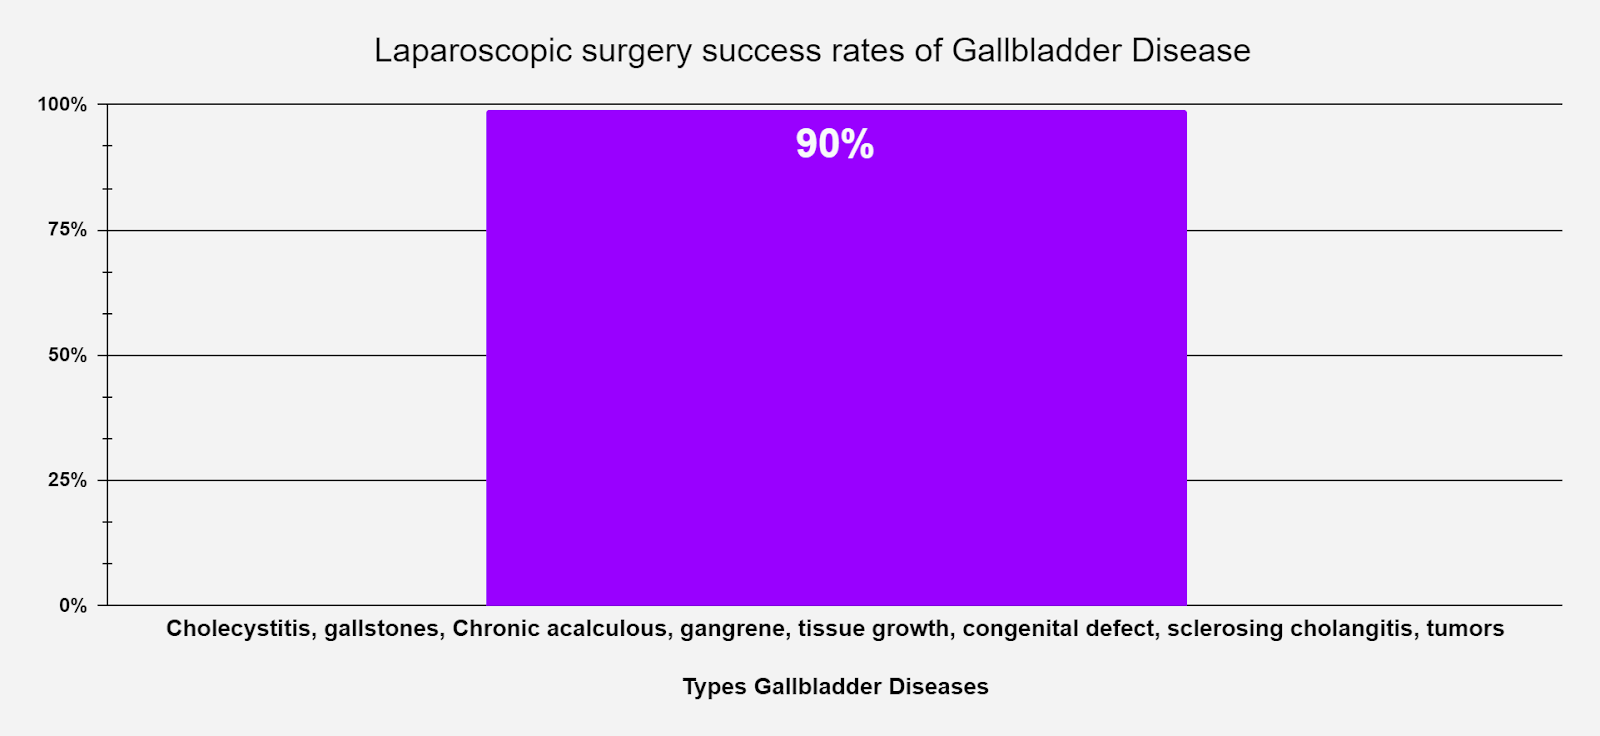  success rates for gallbladder diseases